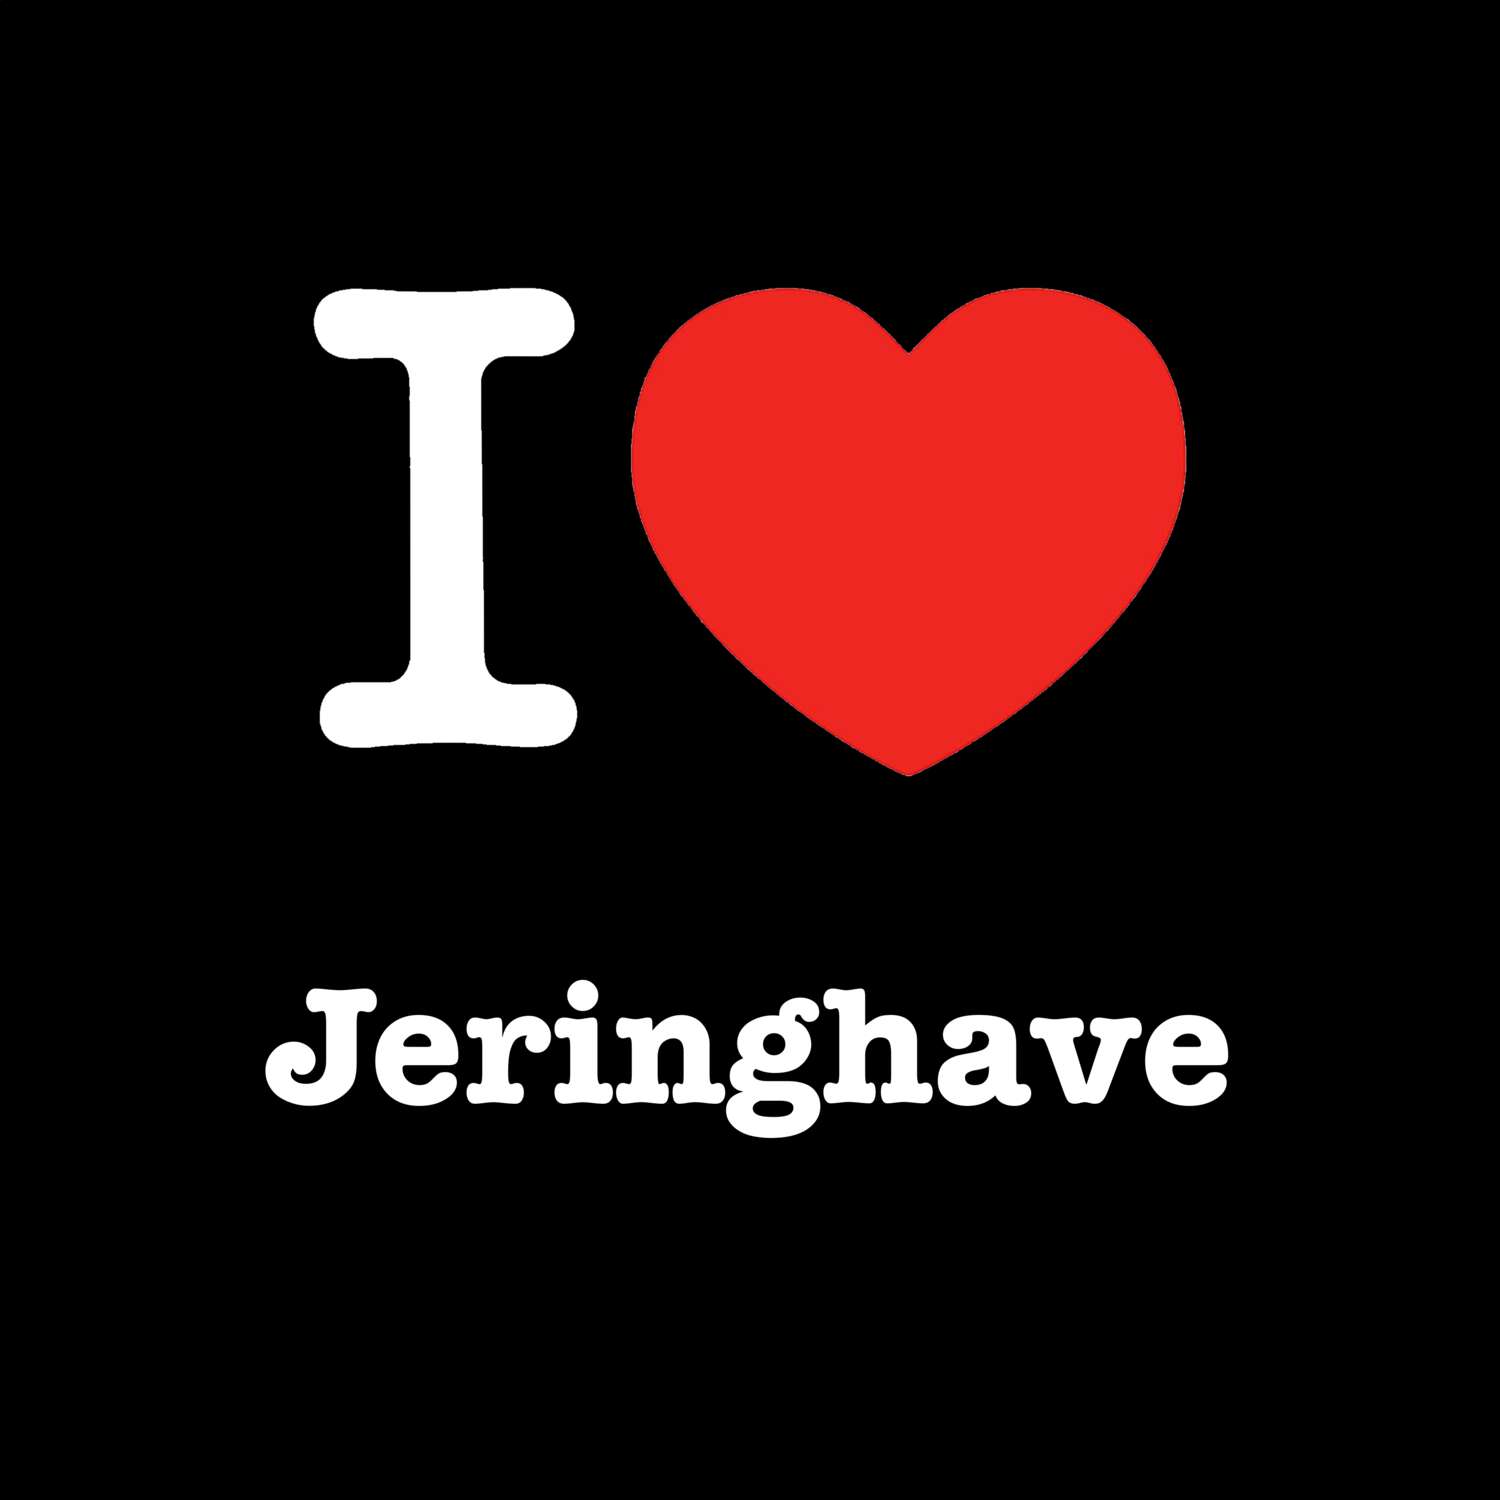 Jeringhave T-Shirt »I love«